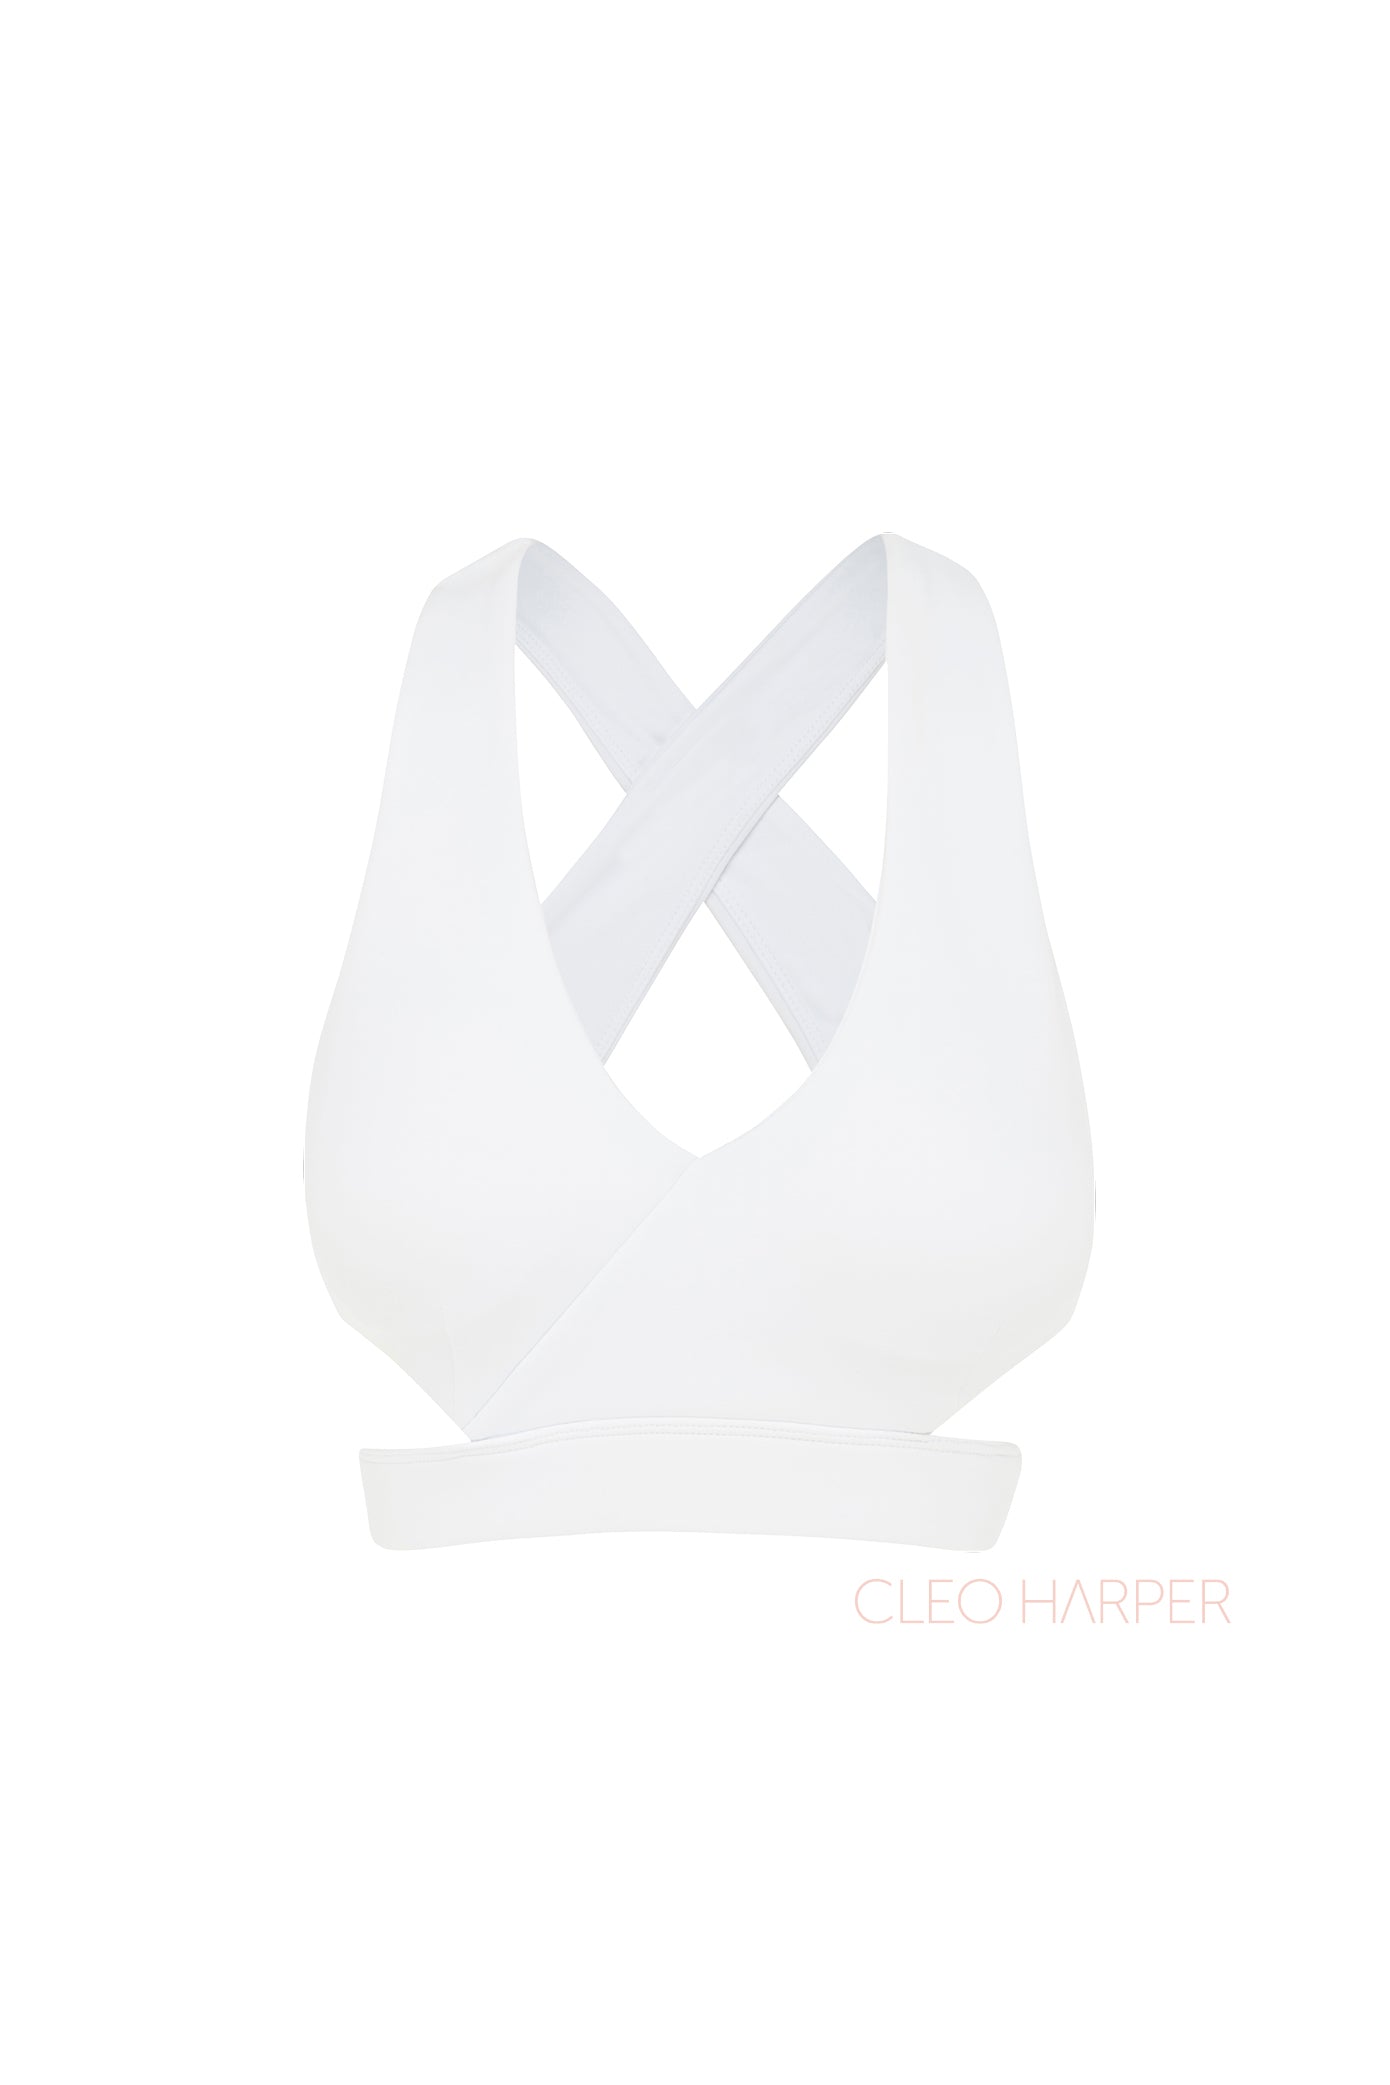 INDY BRALET - WHITE - Cleo Harper